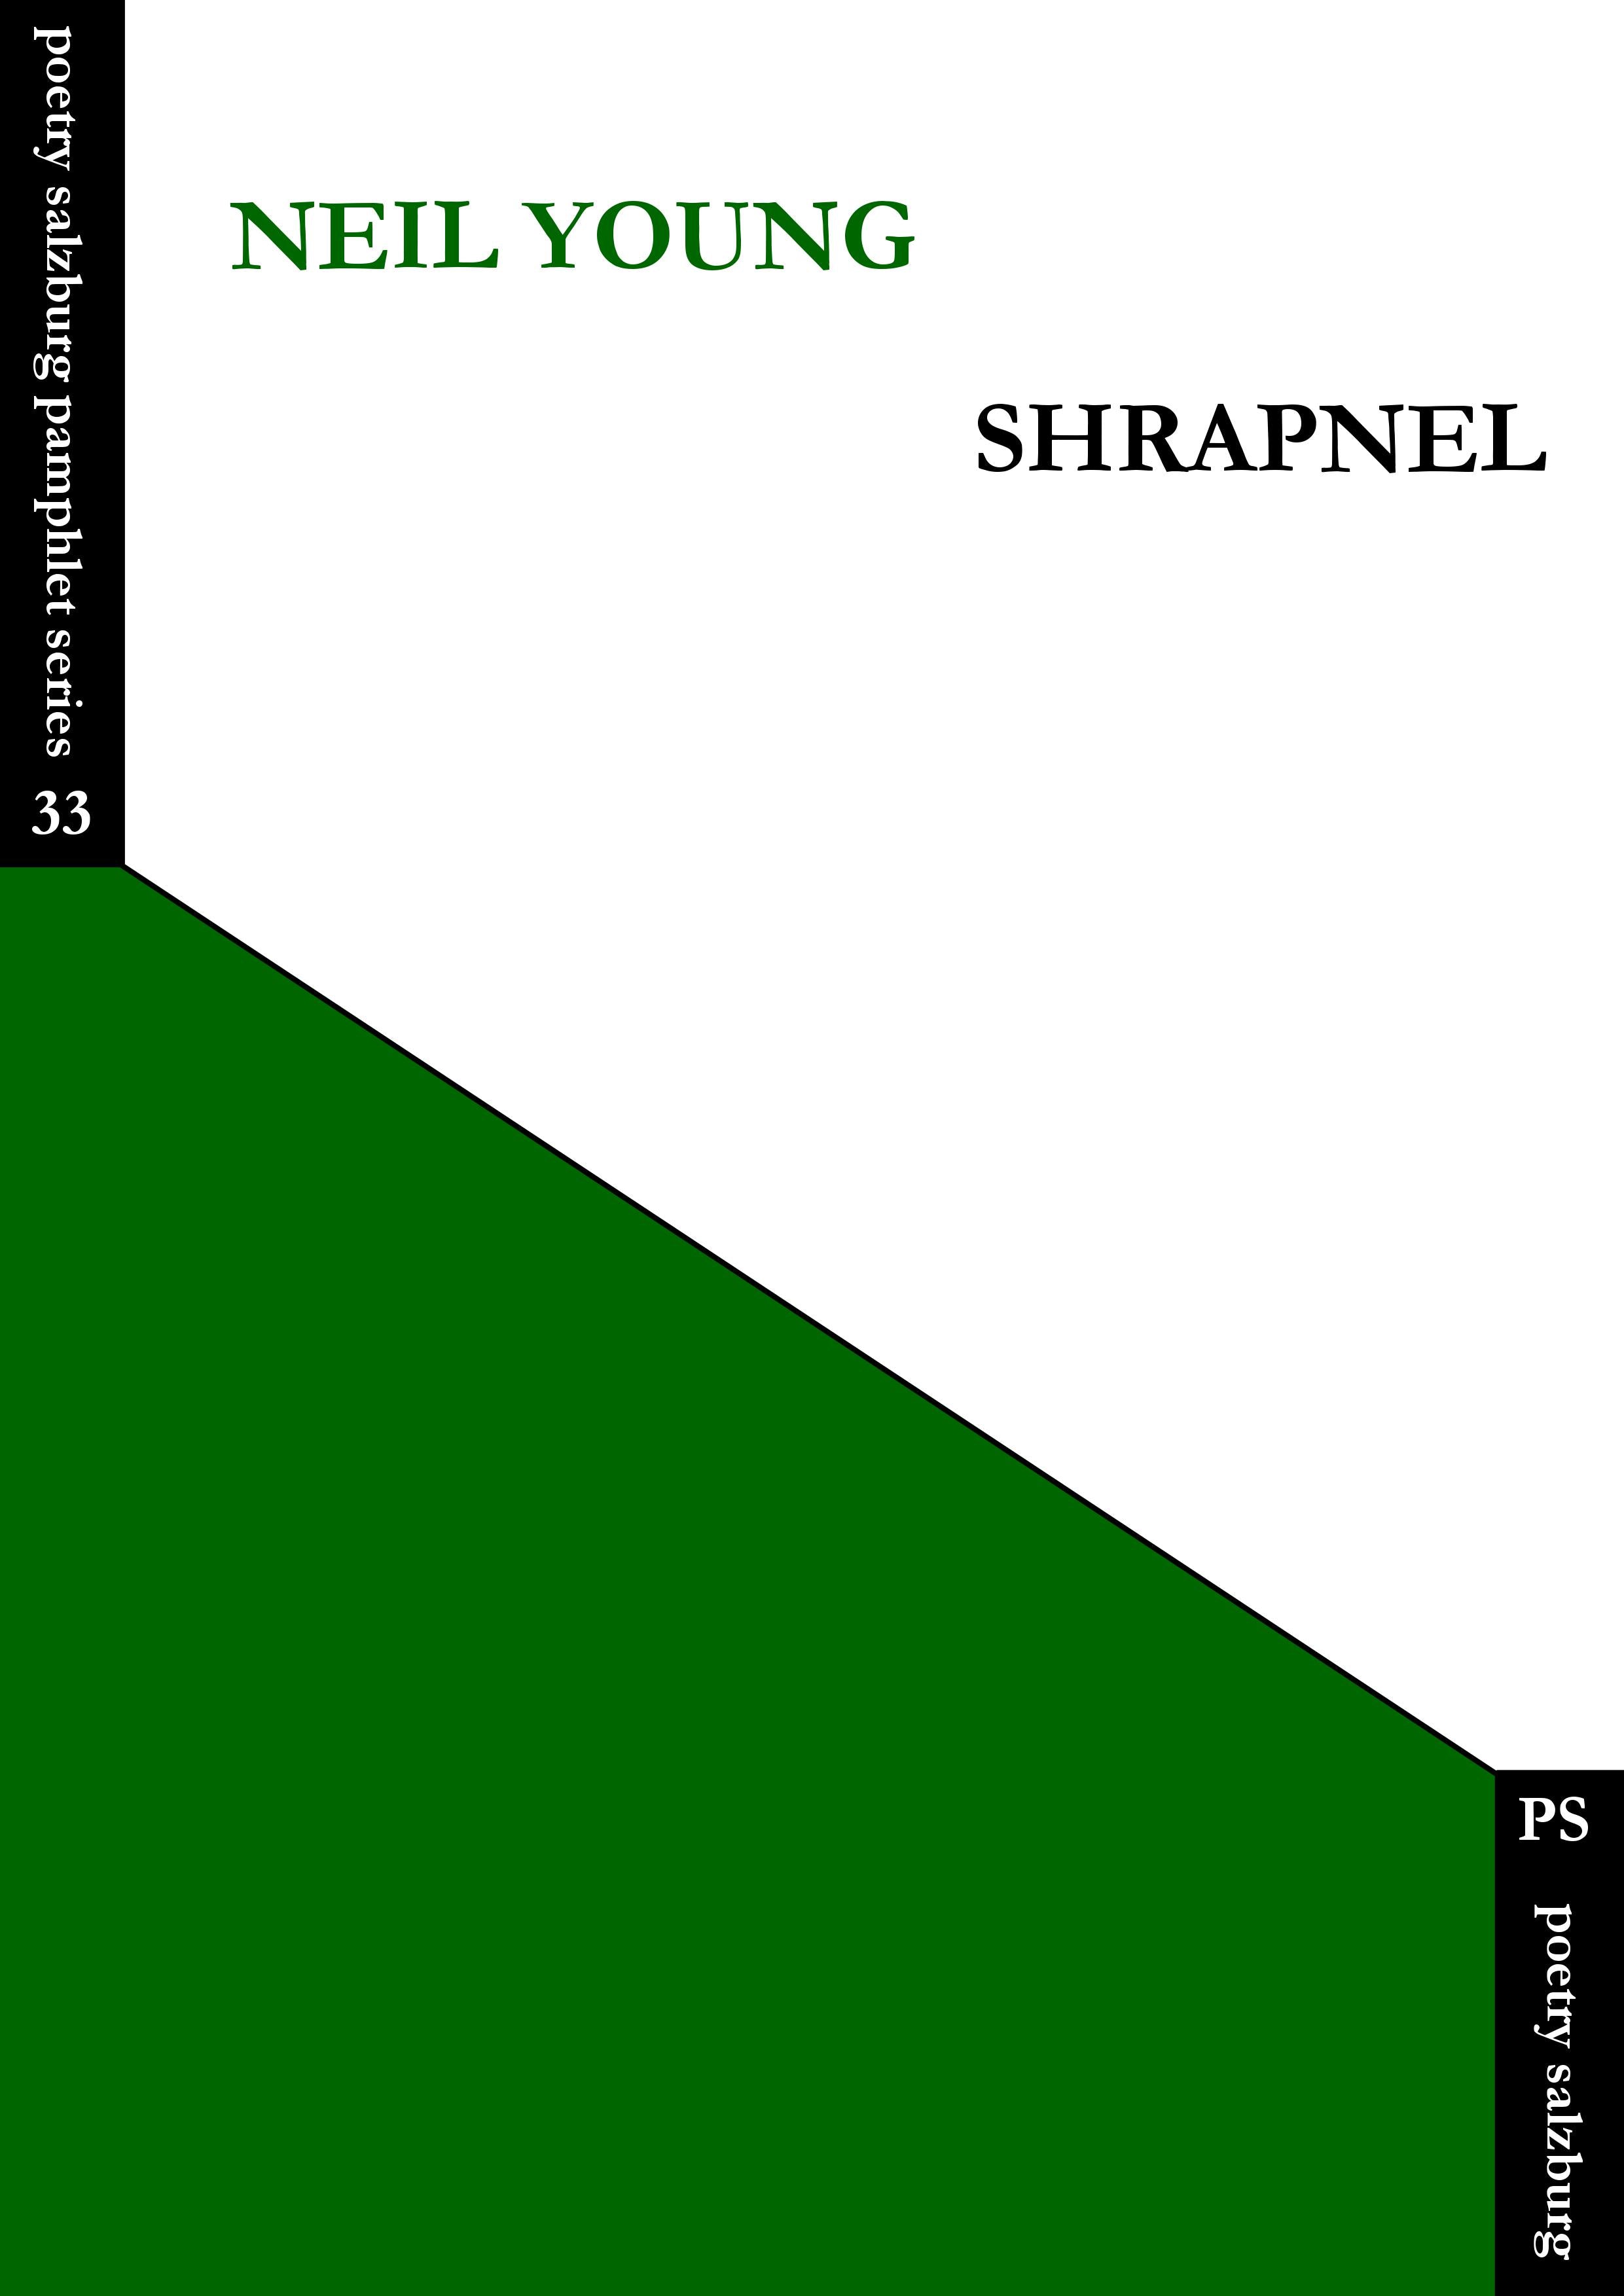 Shrapnel by